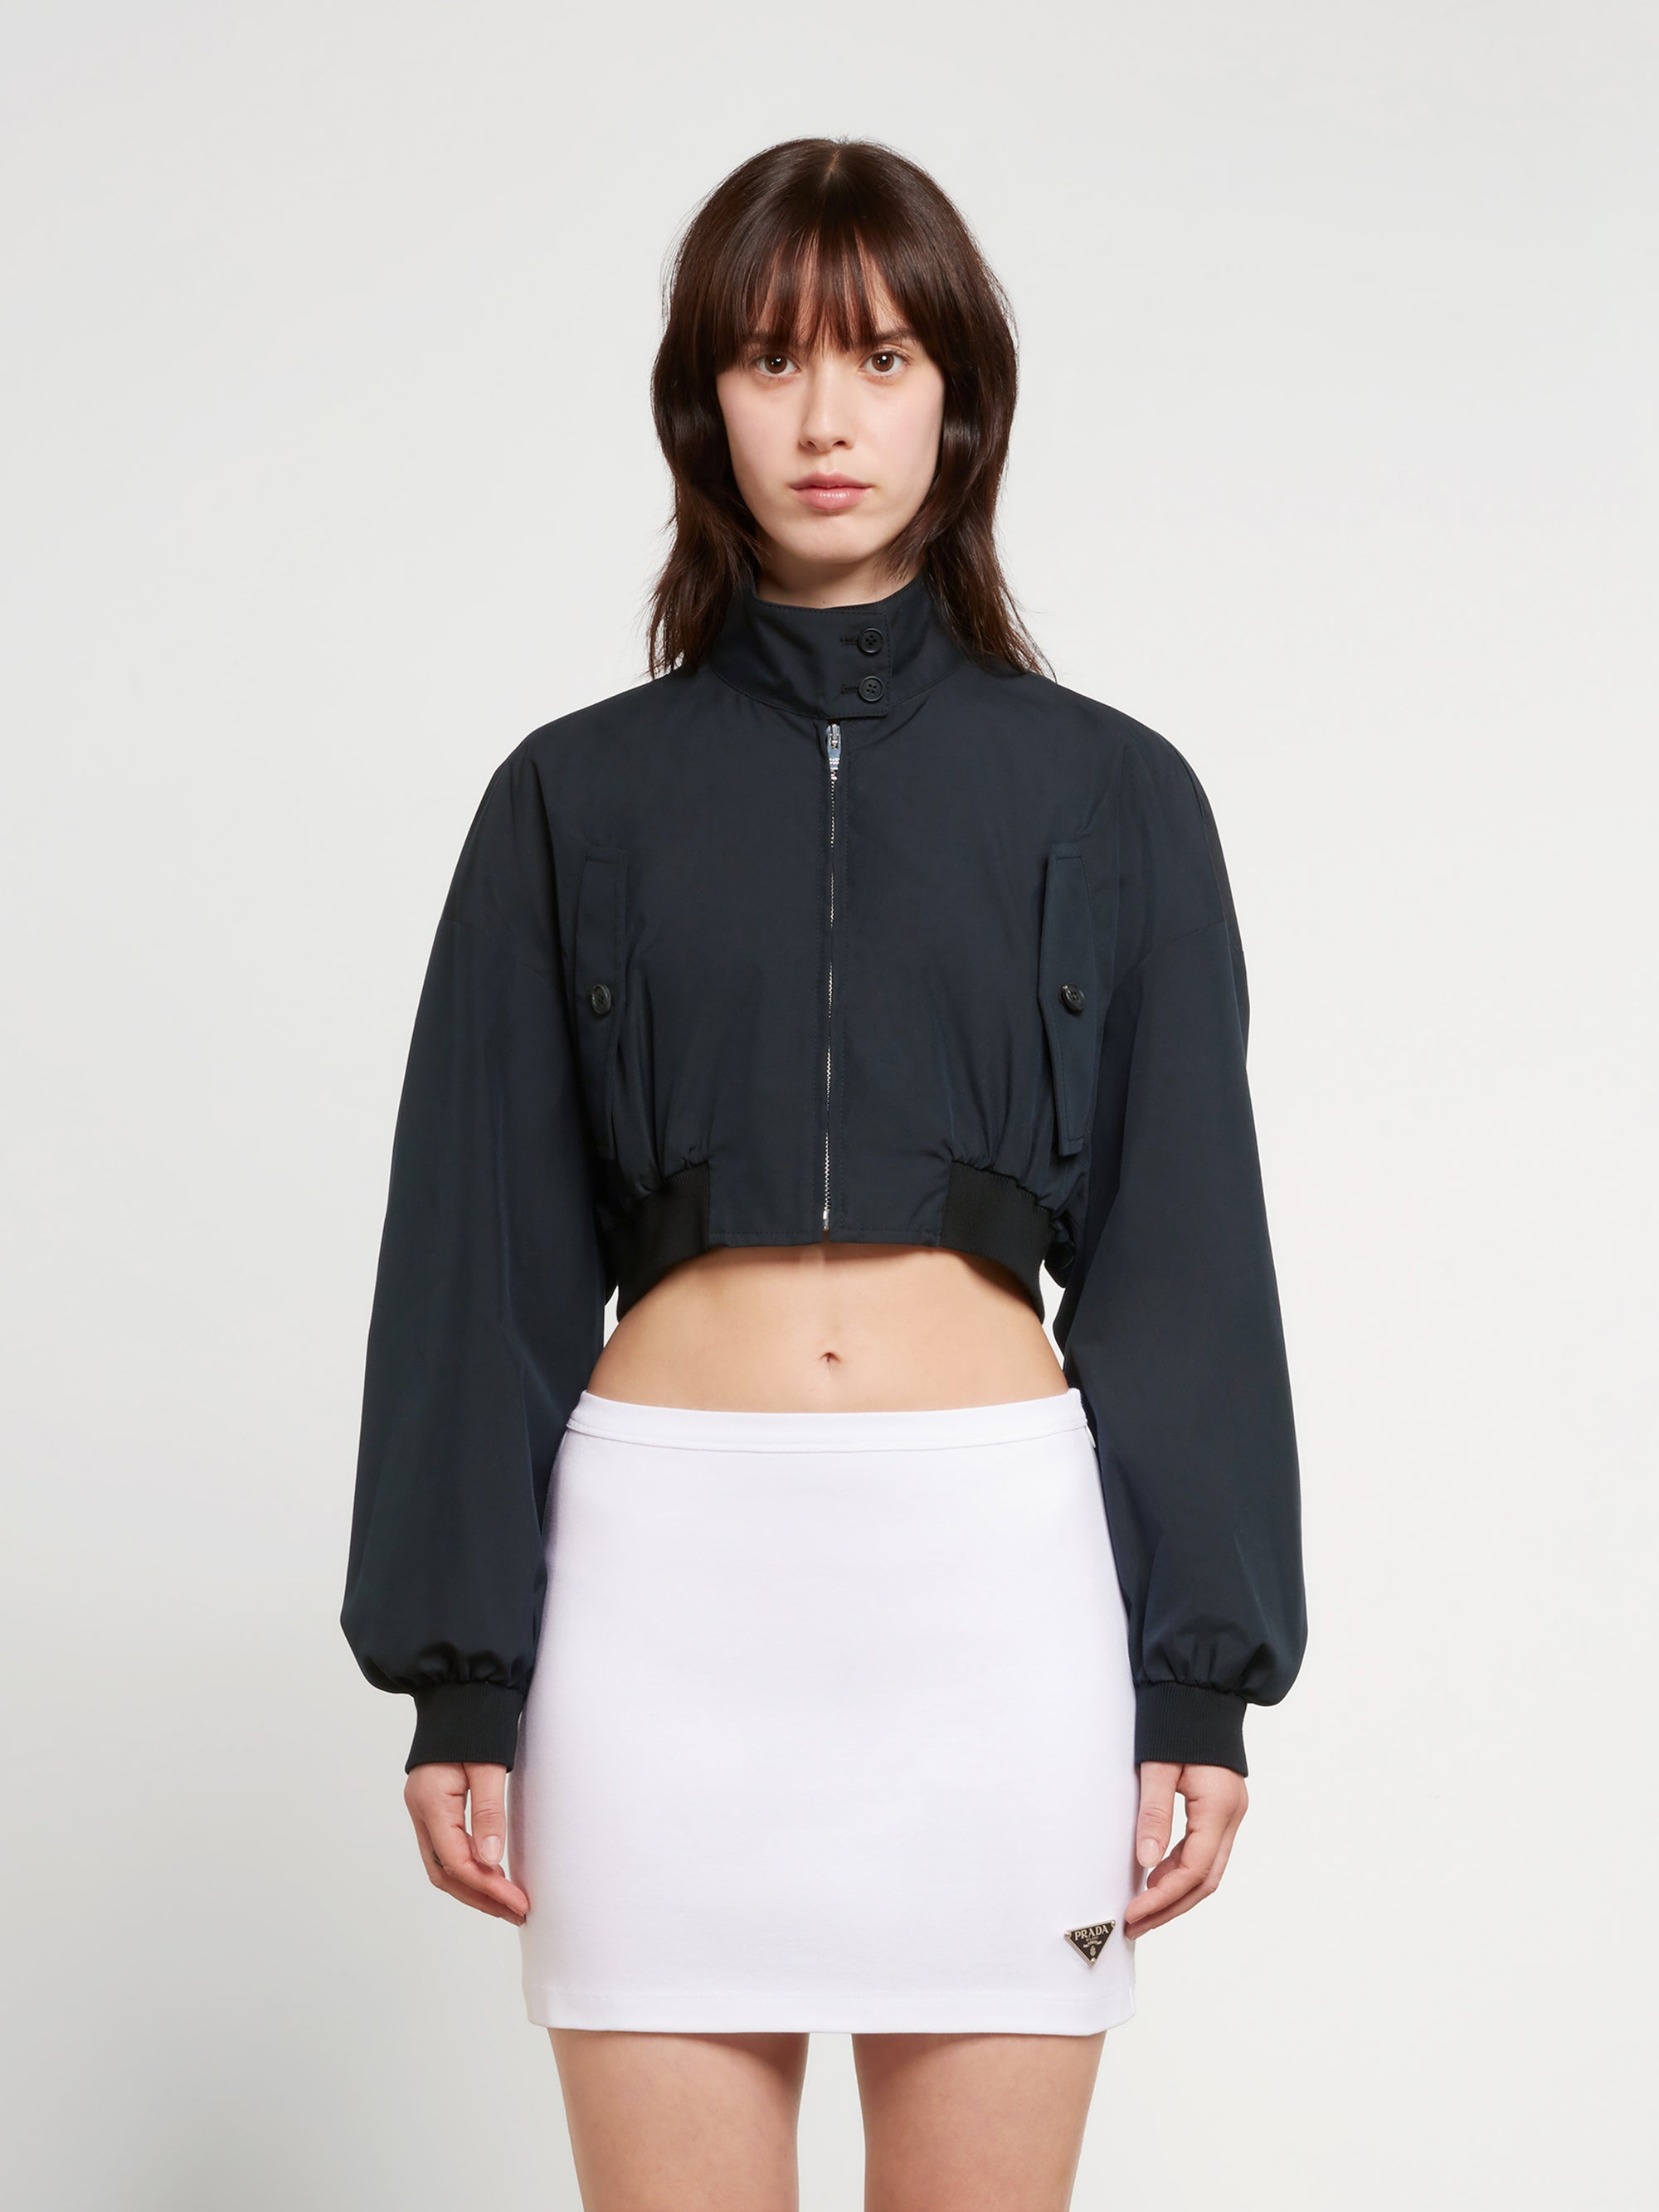 Prada - Women’s Cotton Cropped Jacket - (Black) view 1